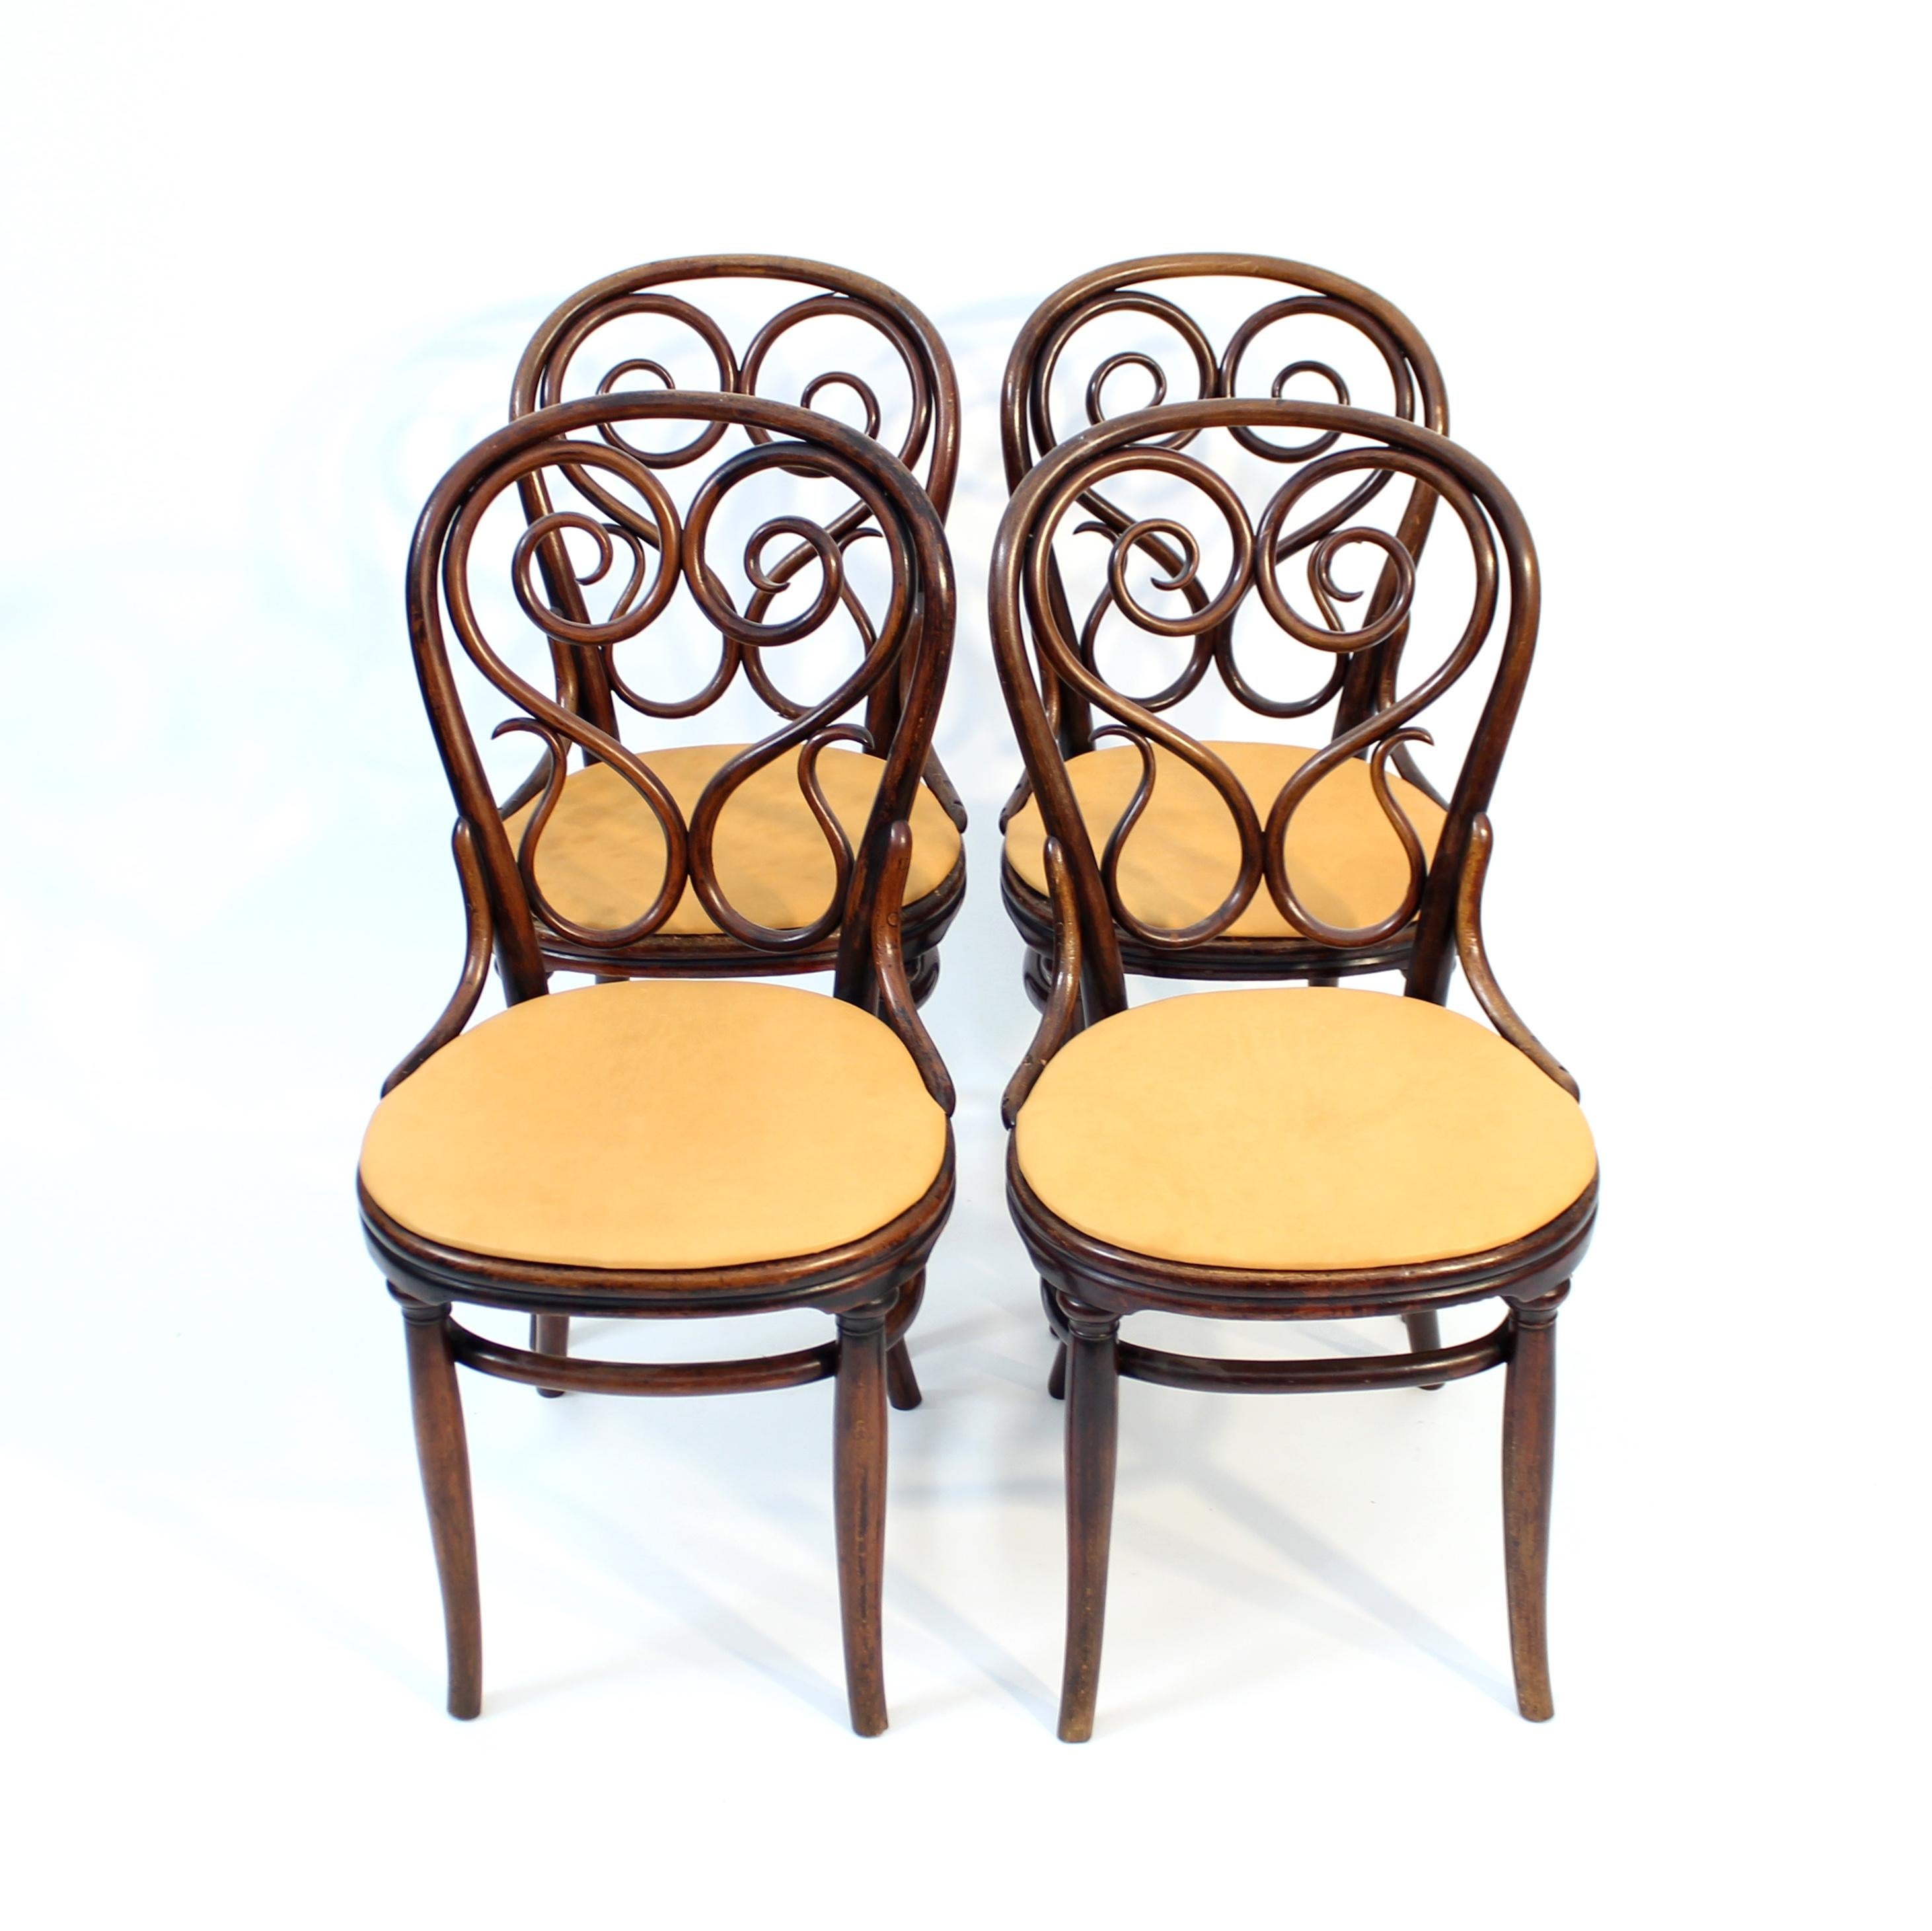 Vienna Secession Michael Thonet, rare set of 4 Café Daum chairs for Thonet, 1849